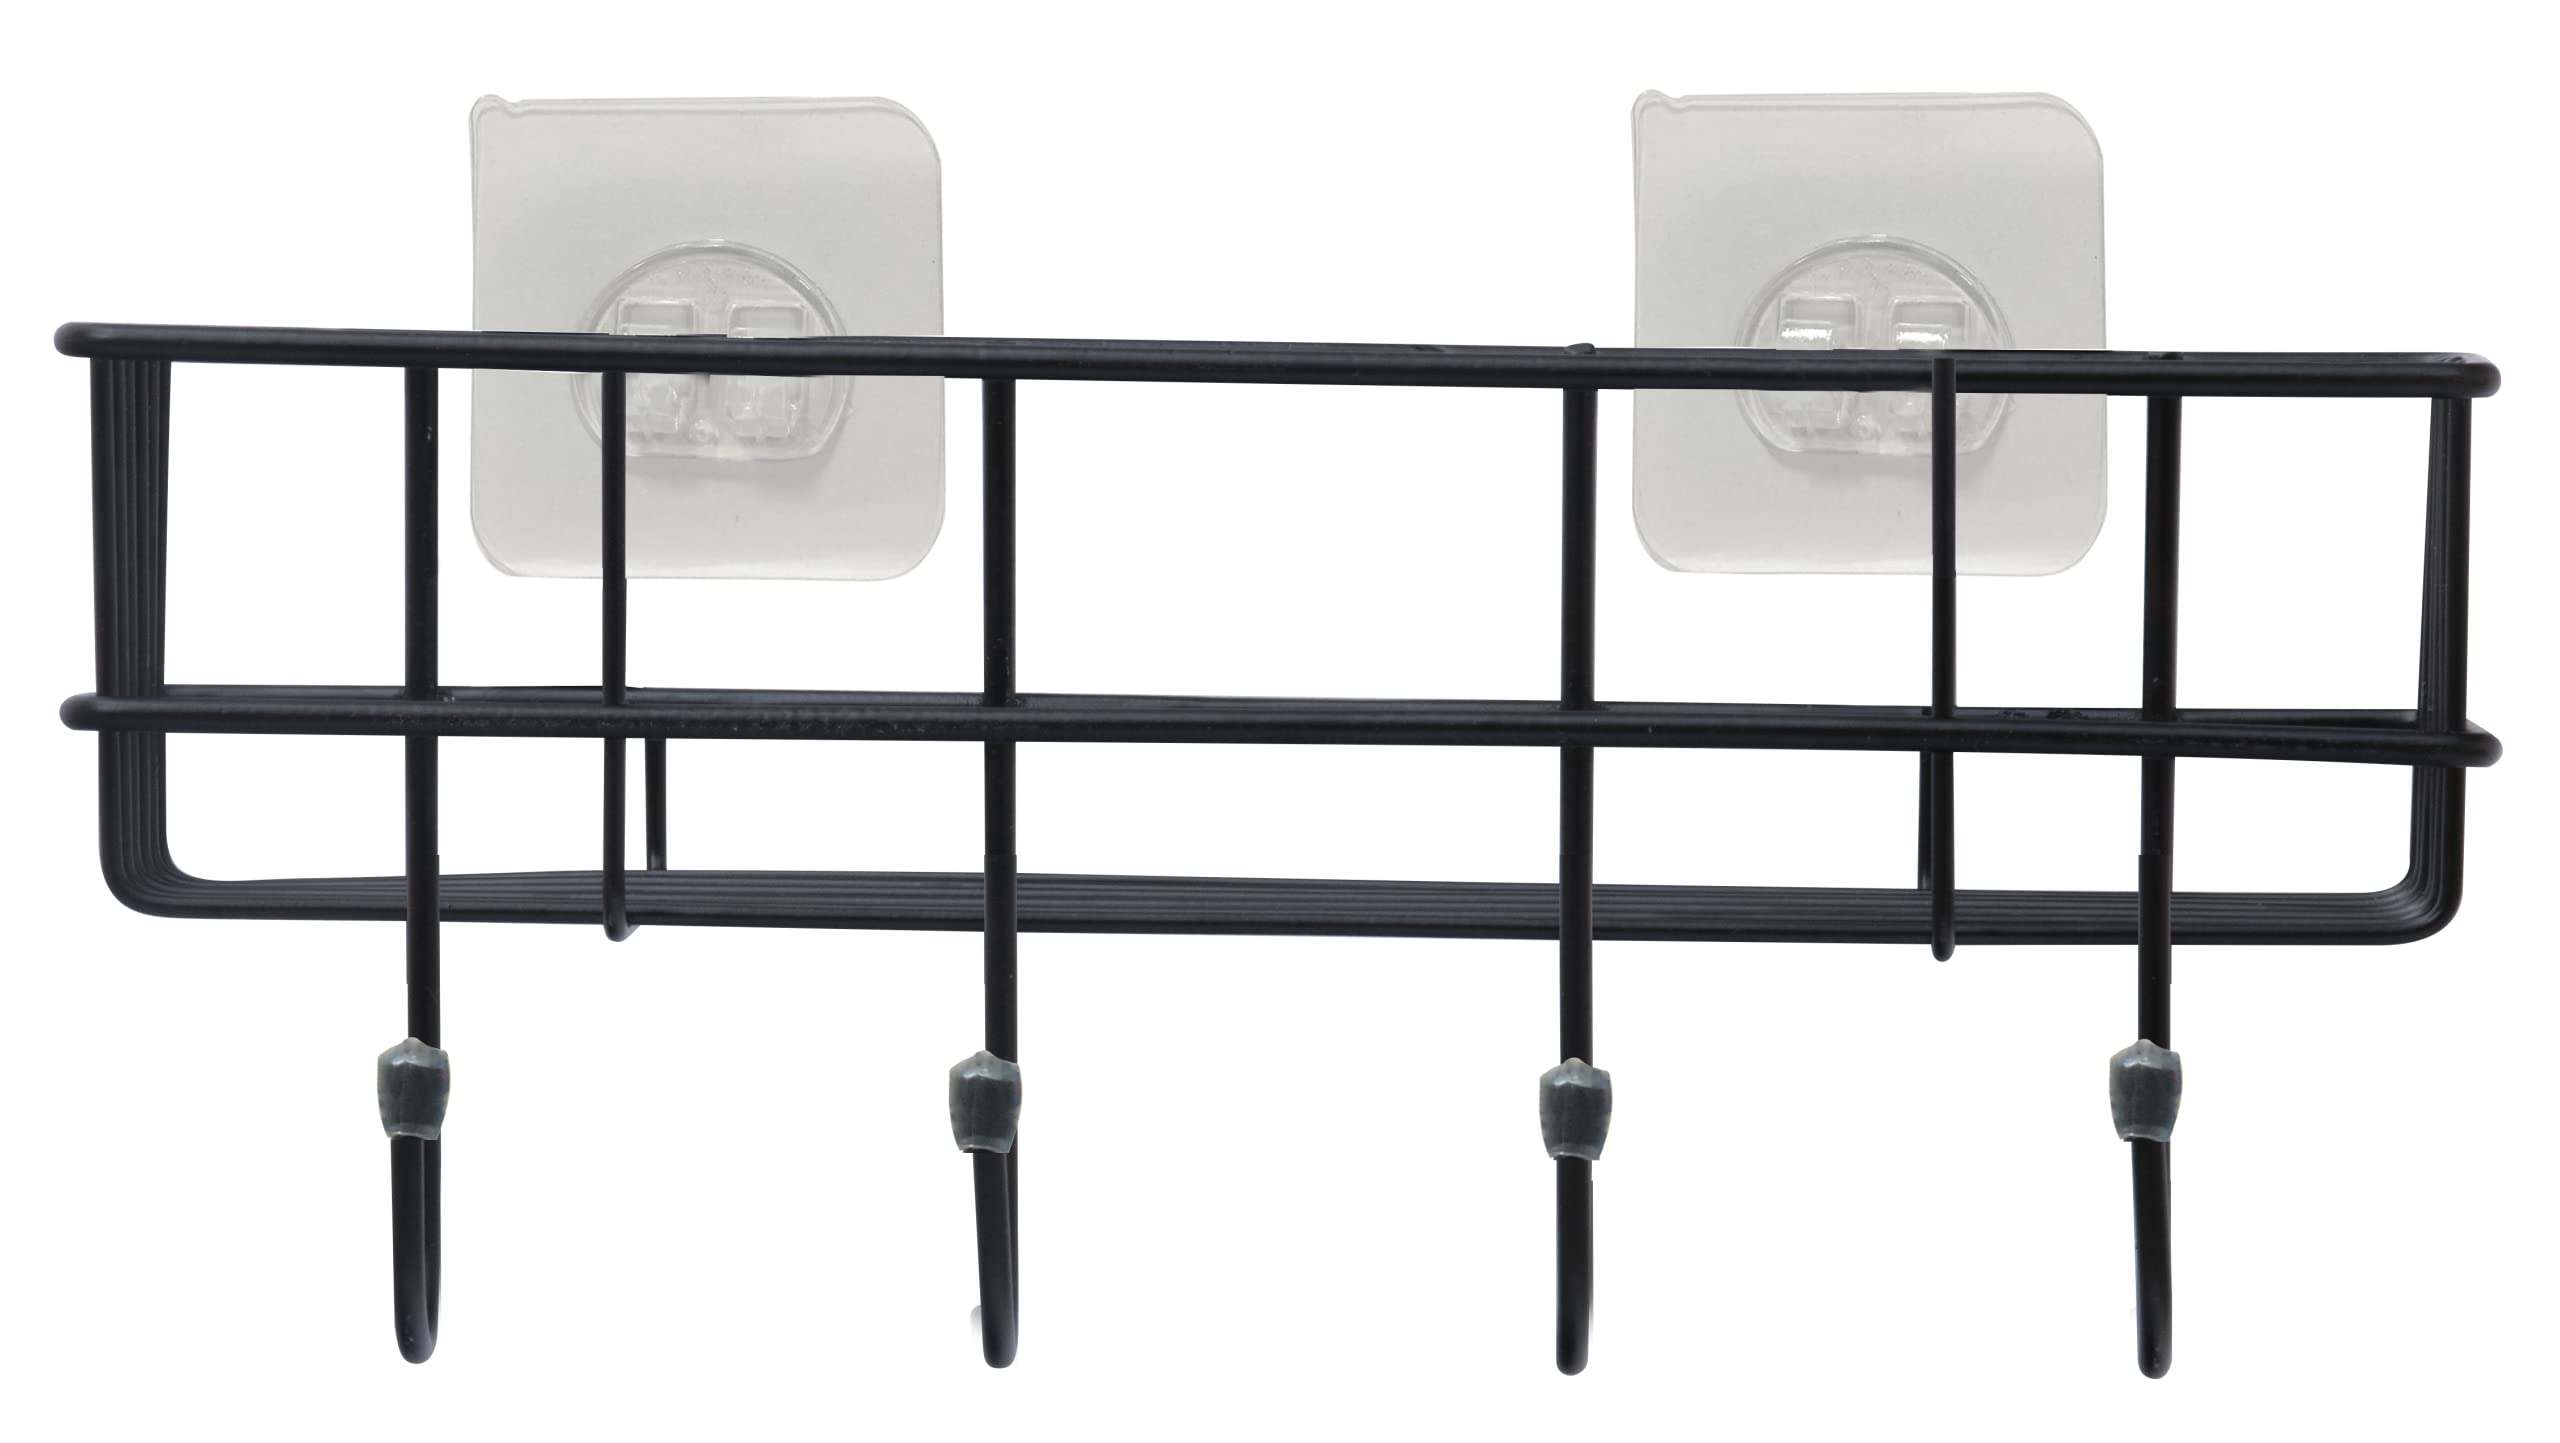 Plantex GI Steel Self-Adhesive Multipurpose Bathroom Shelf with Hooks/Towel Holder/Rack/Bathroom Accessories - Wall Mount (Black,Powder Coated)